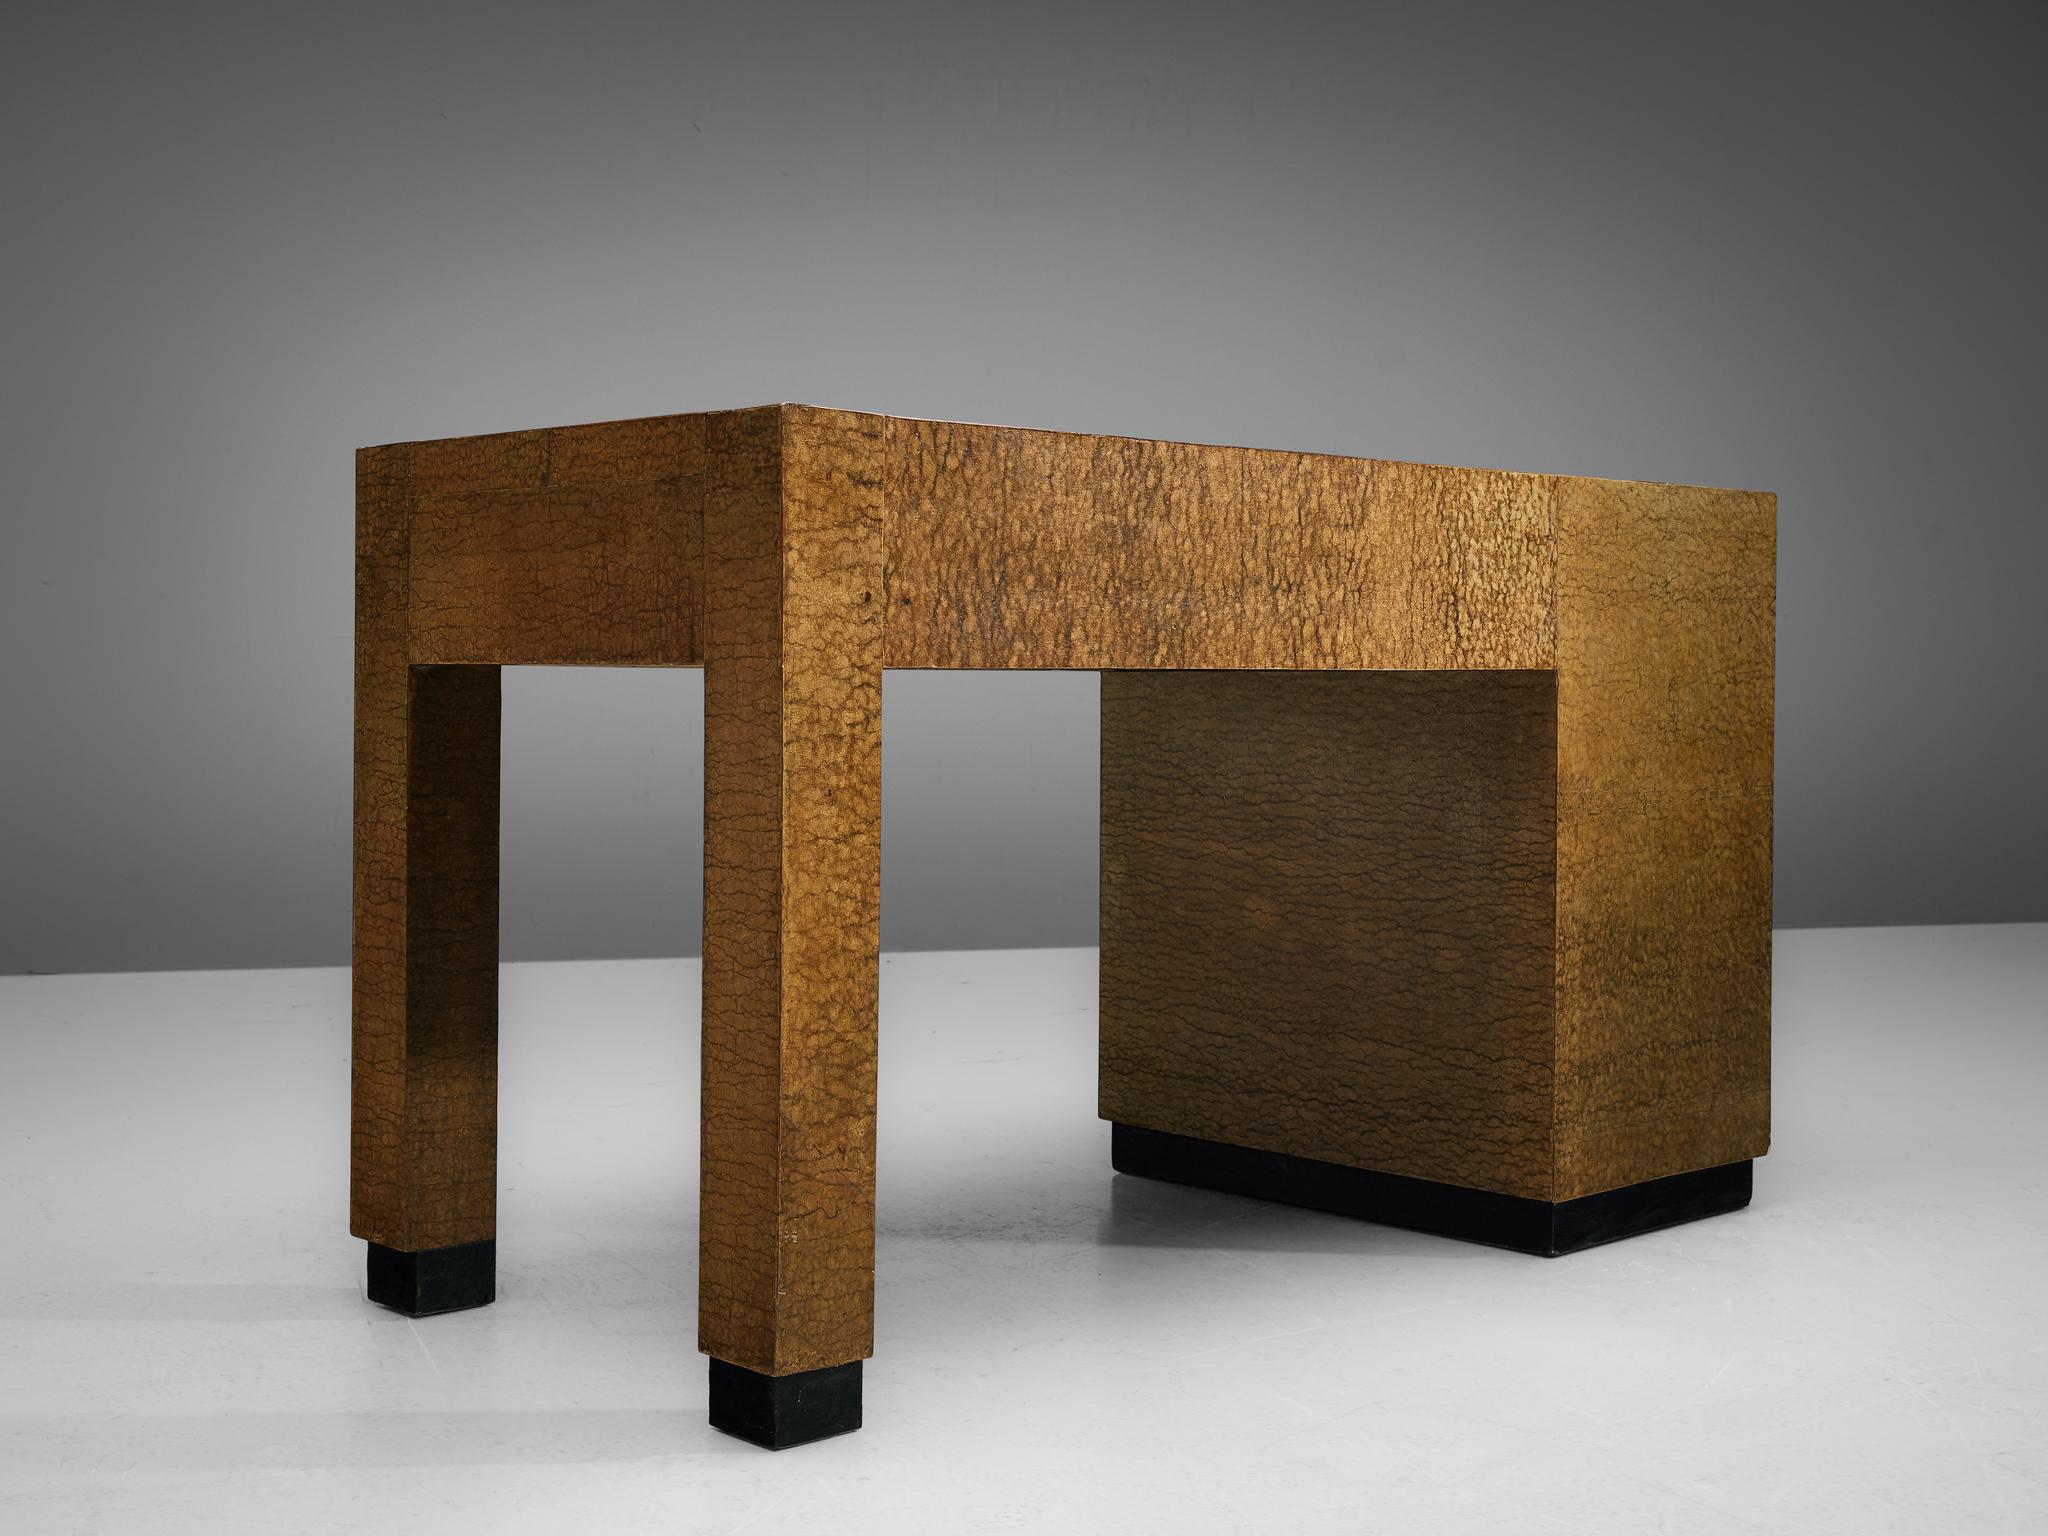 Art Deco Giuseppe Pagano and Gino Levi Montalcini Buxus Desk